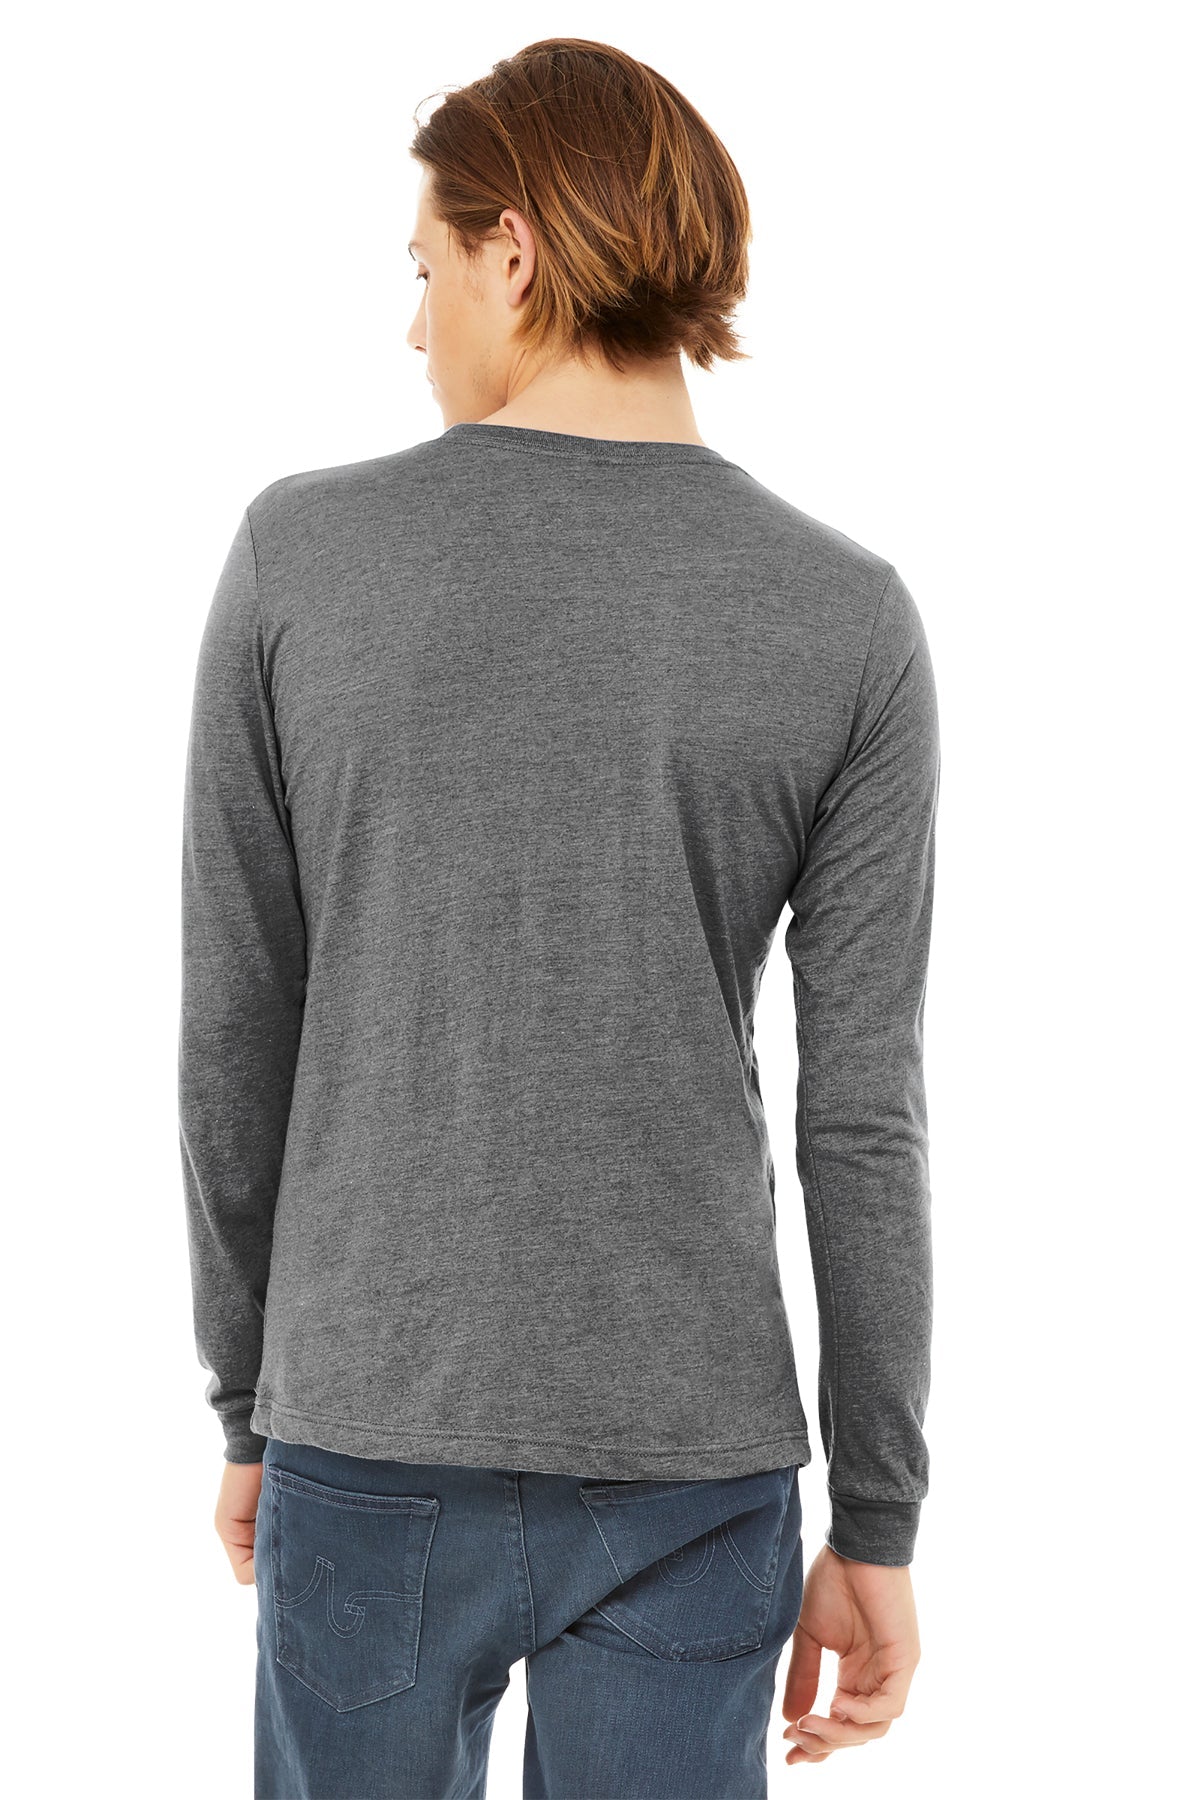 Bella Canvas Unisex Triblend Long Sleeve T-Shirt, Grey